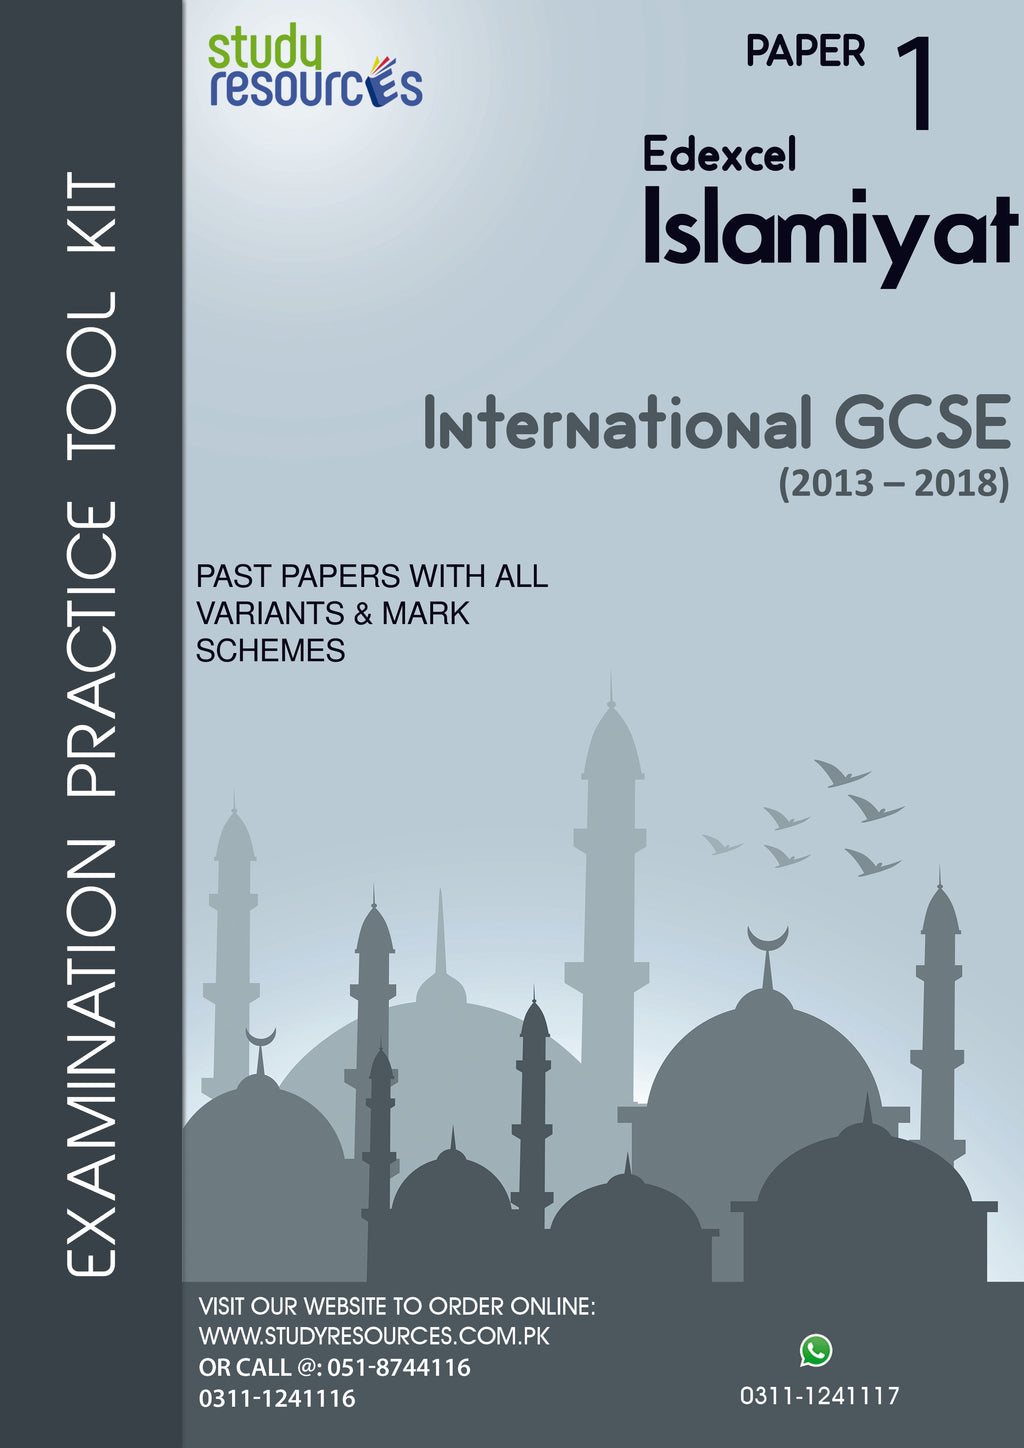 Edexcel IGCSE Islamiyat P-1 Past Papers (2013-2018)